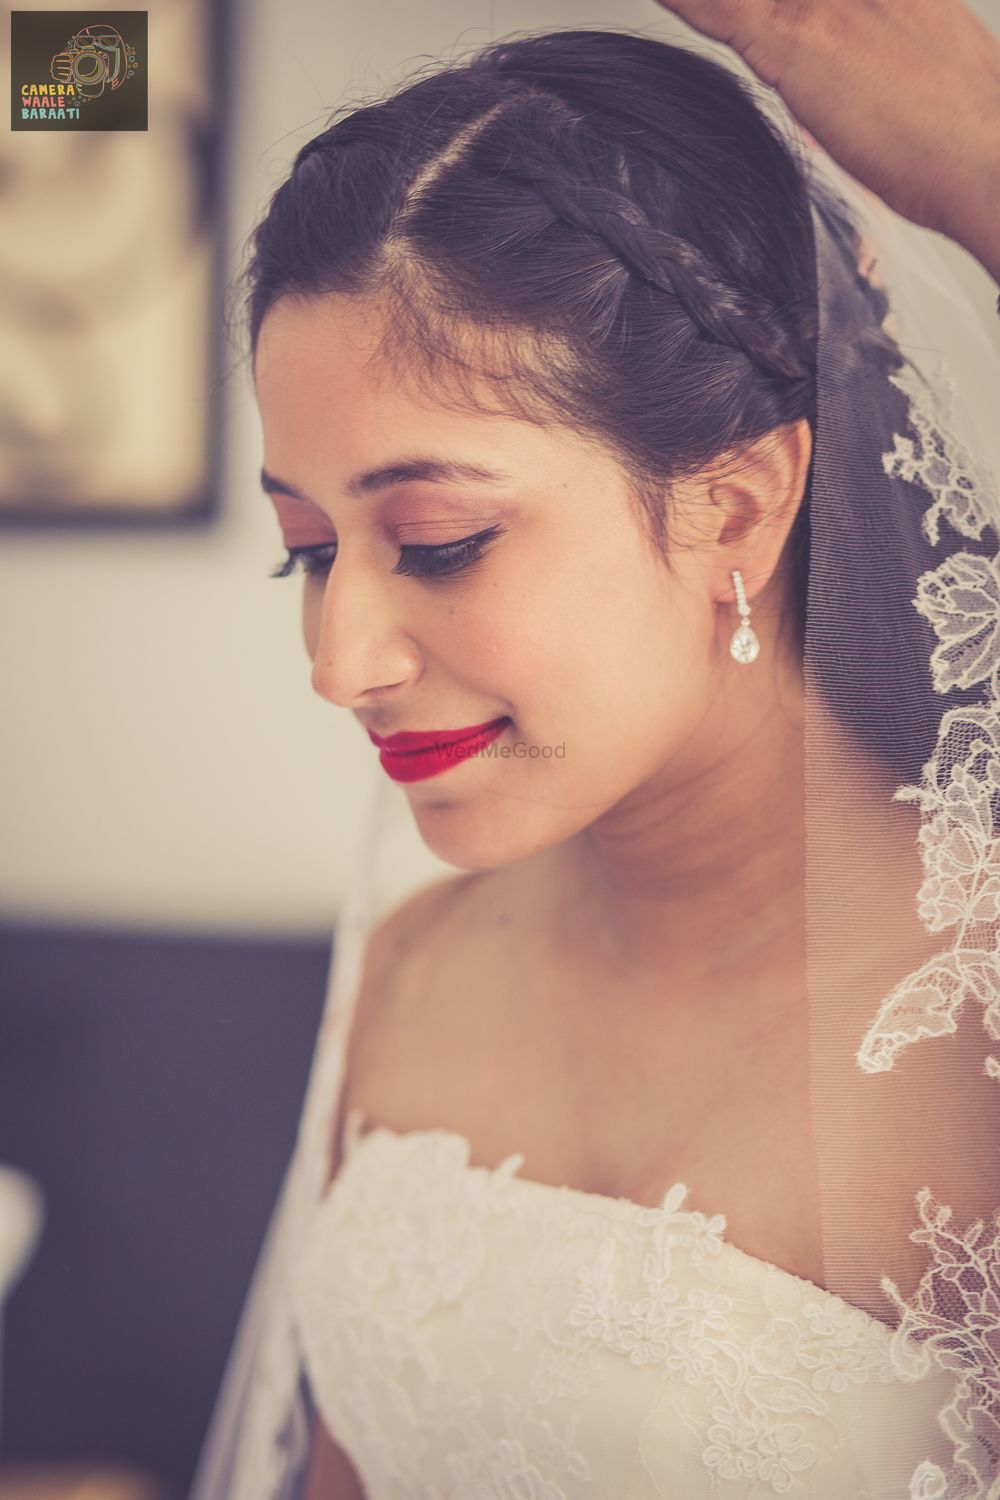 Photo From The Goa Wedding: Samhita and Gaurav - By Tanushree Bhasin Photography